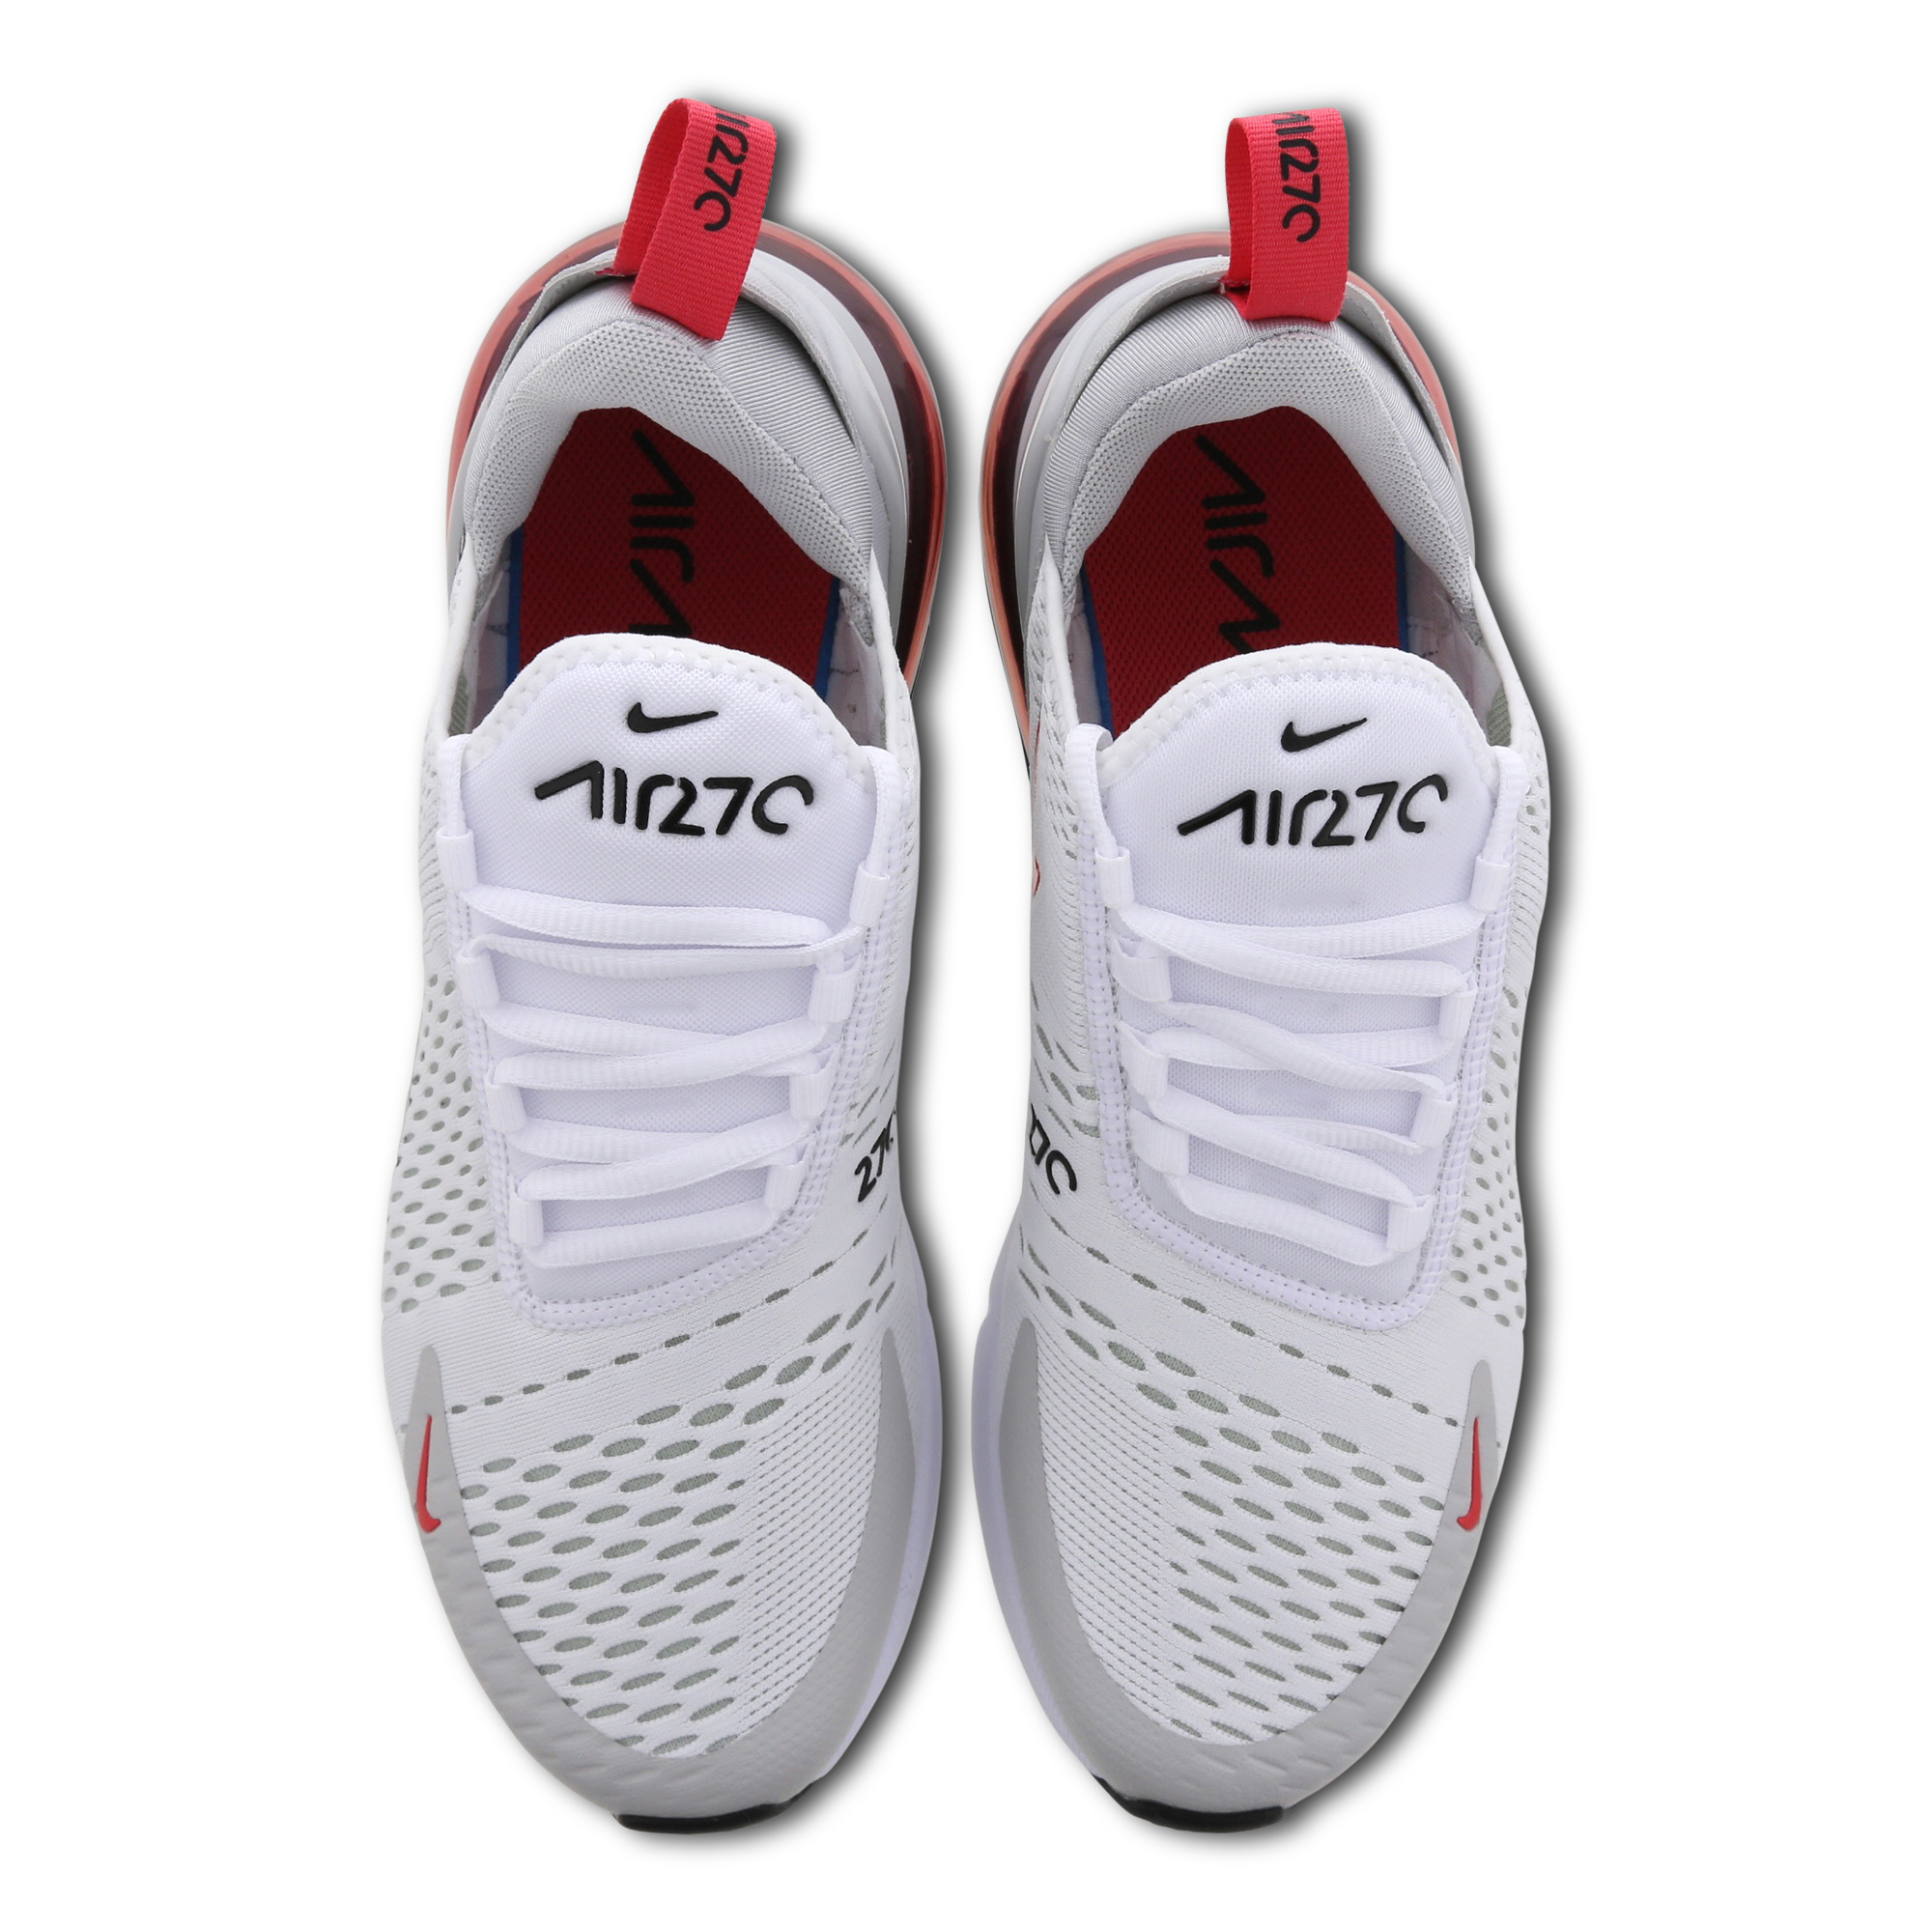 Nike Air Max 270 @ Footlocker